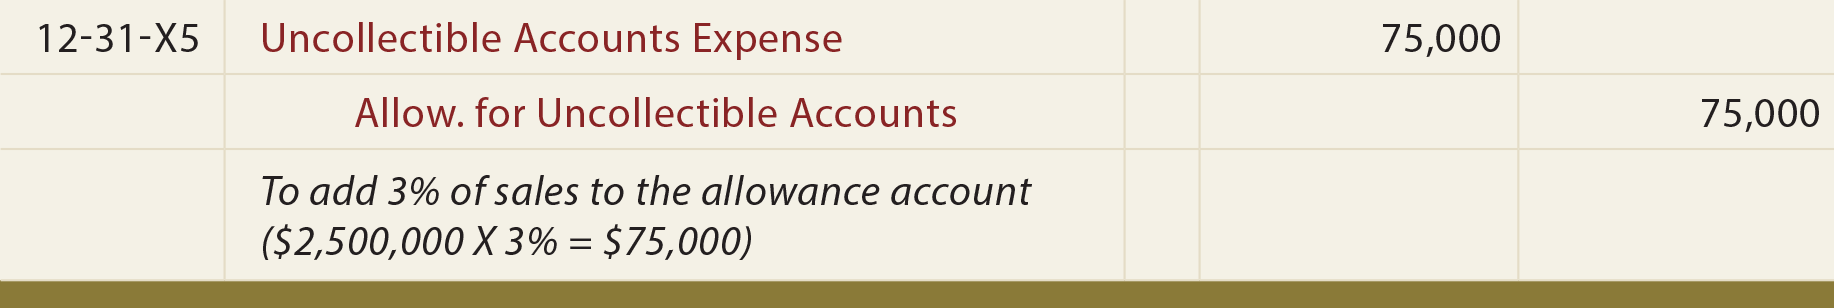 Allowance For Uncollectible Accounts general Journal Entry - Establish allowance